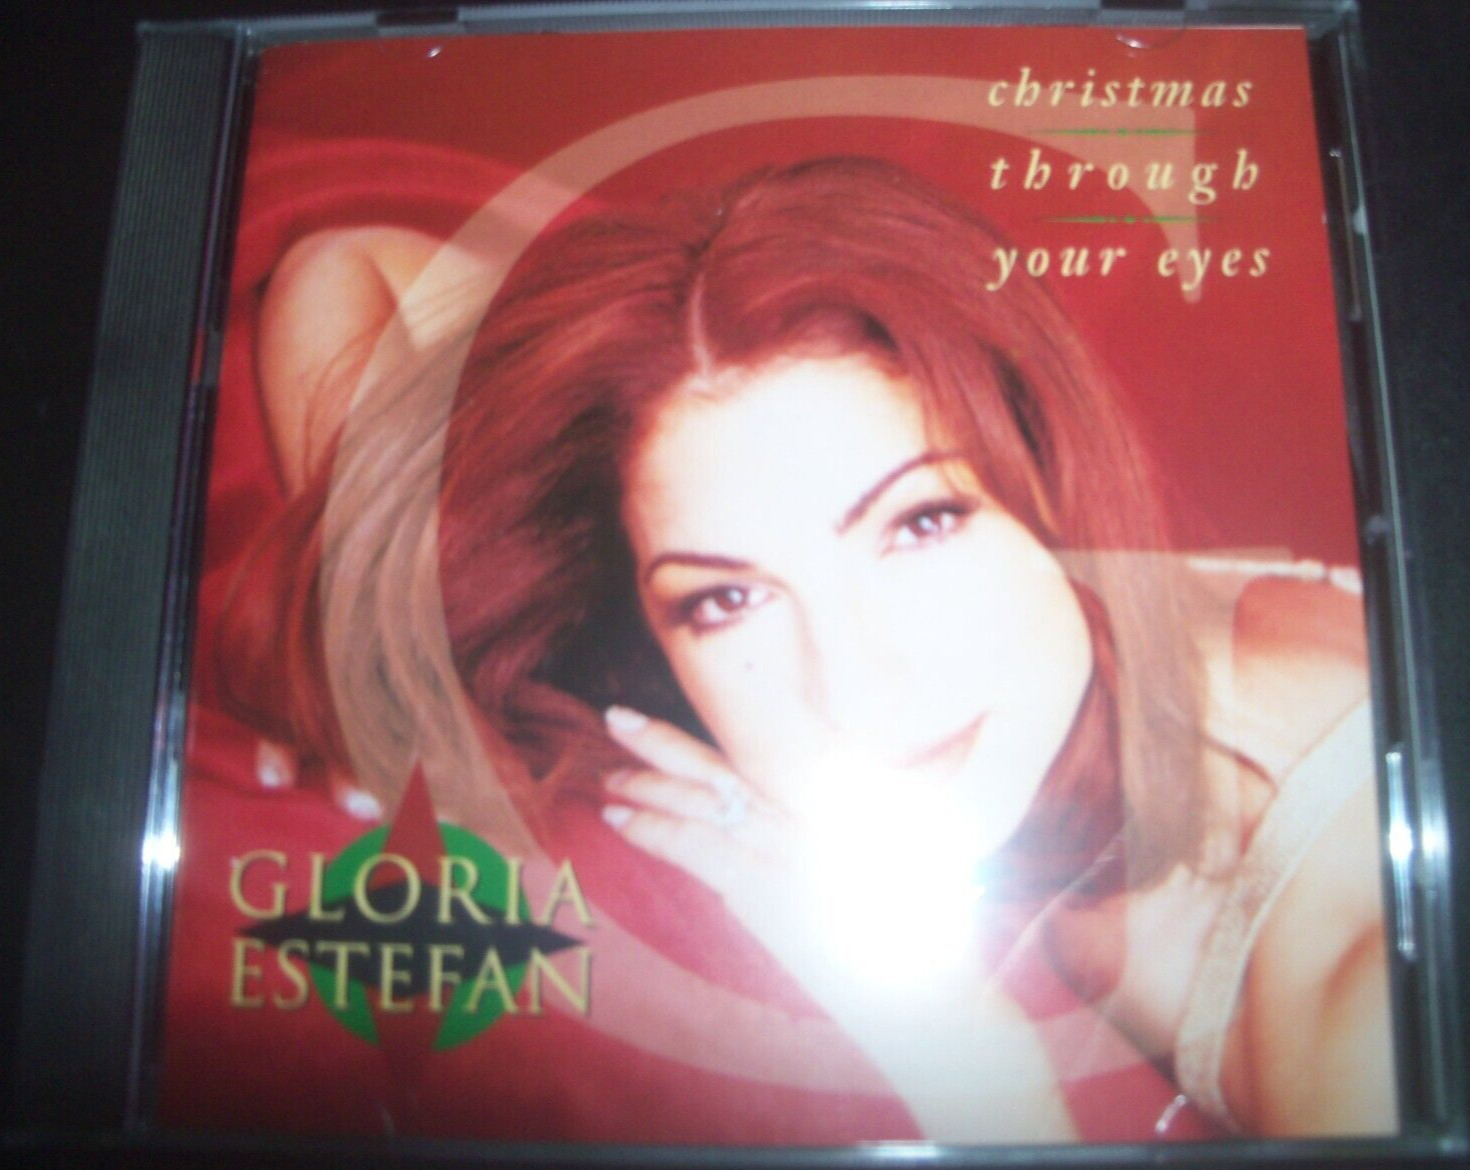 Gloria Estefan – Christmas Through Your Eyes (Australia) CD – Like New